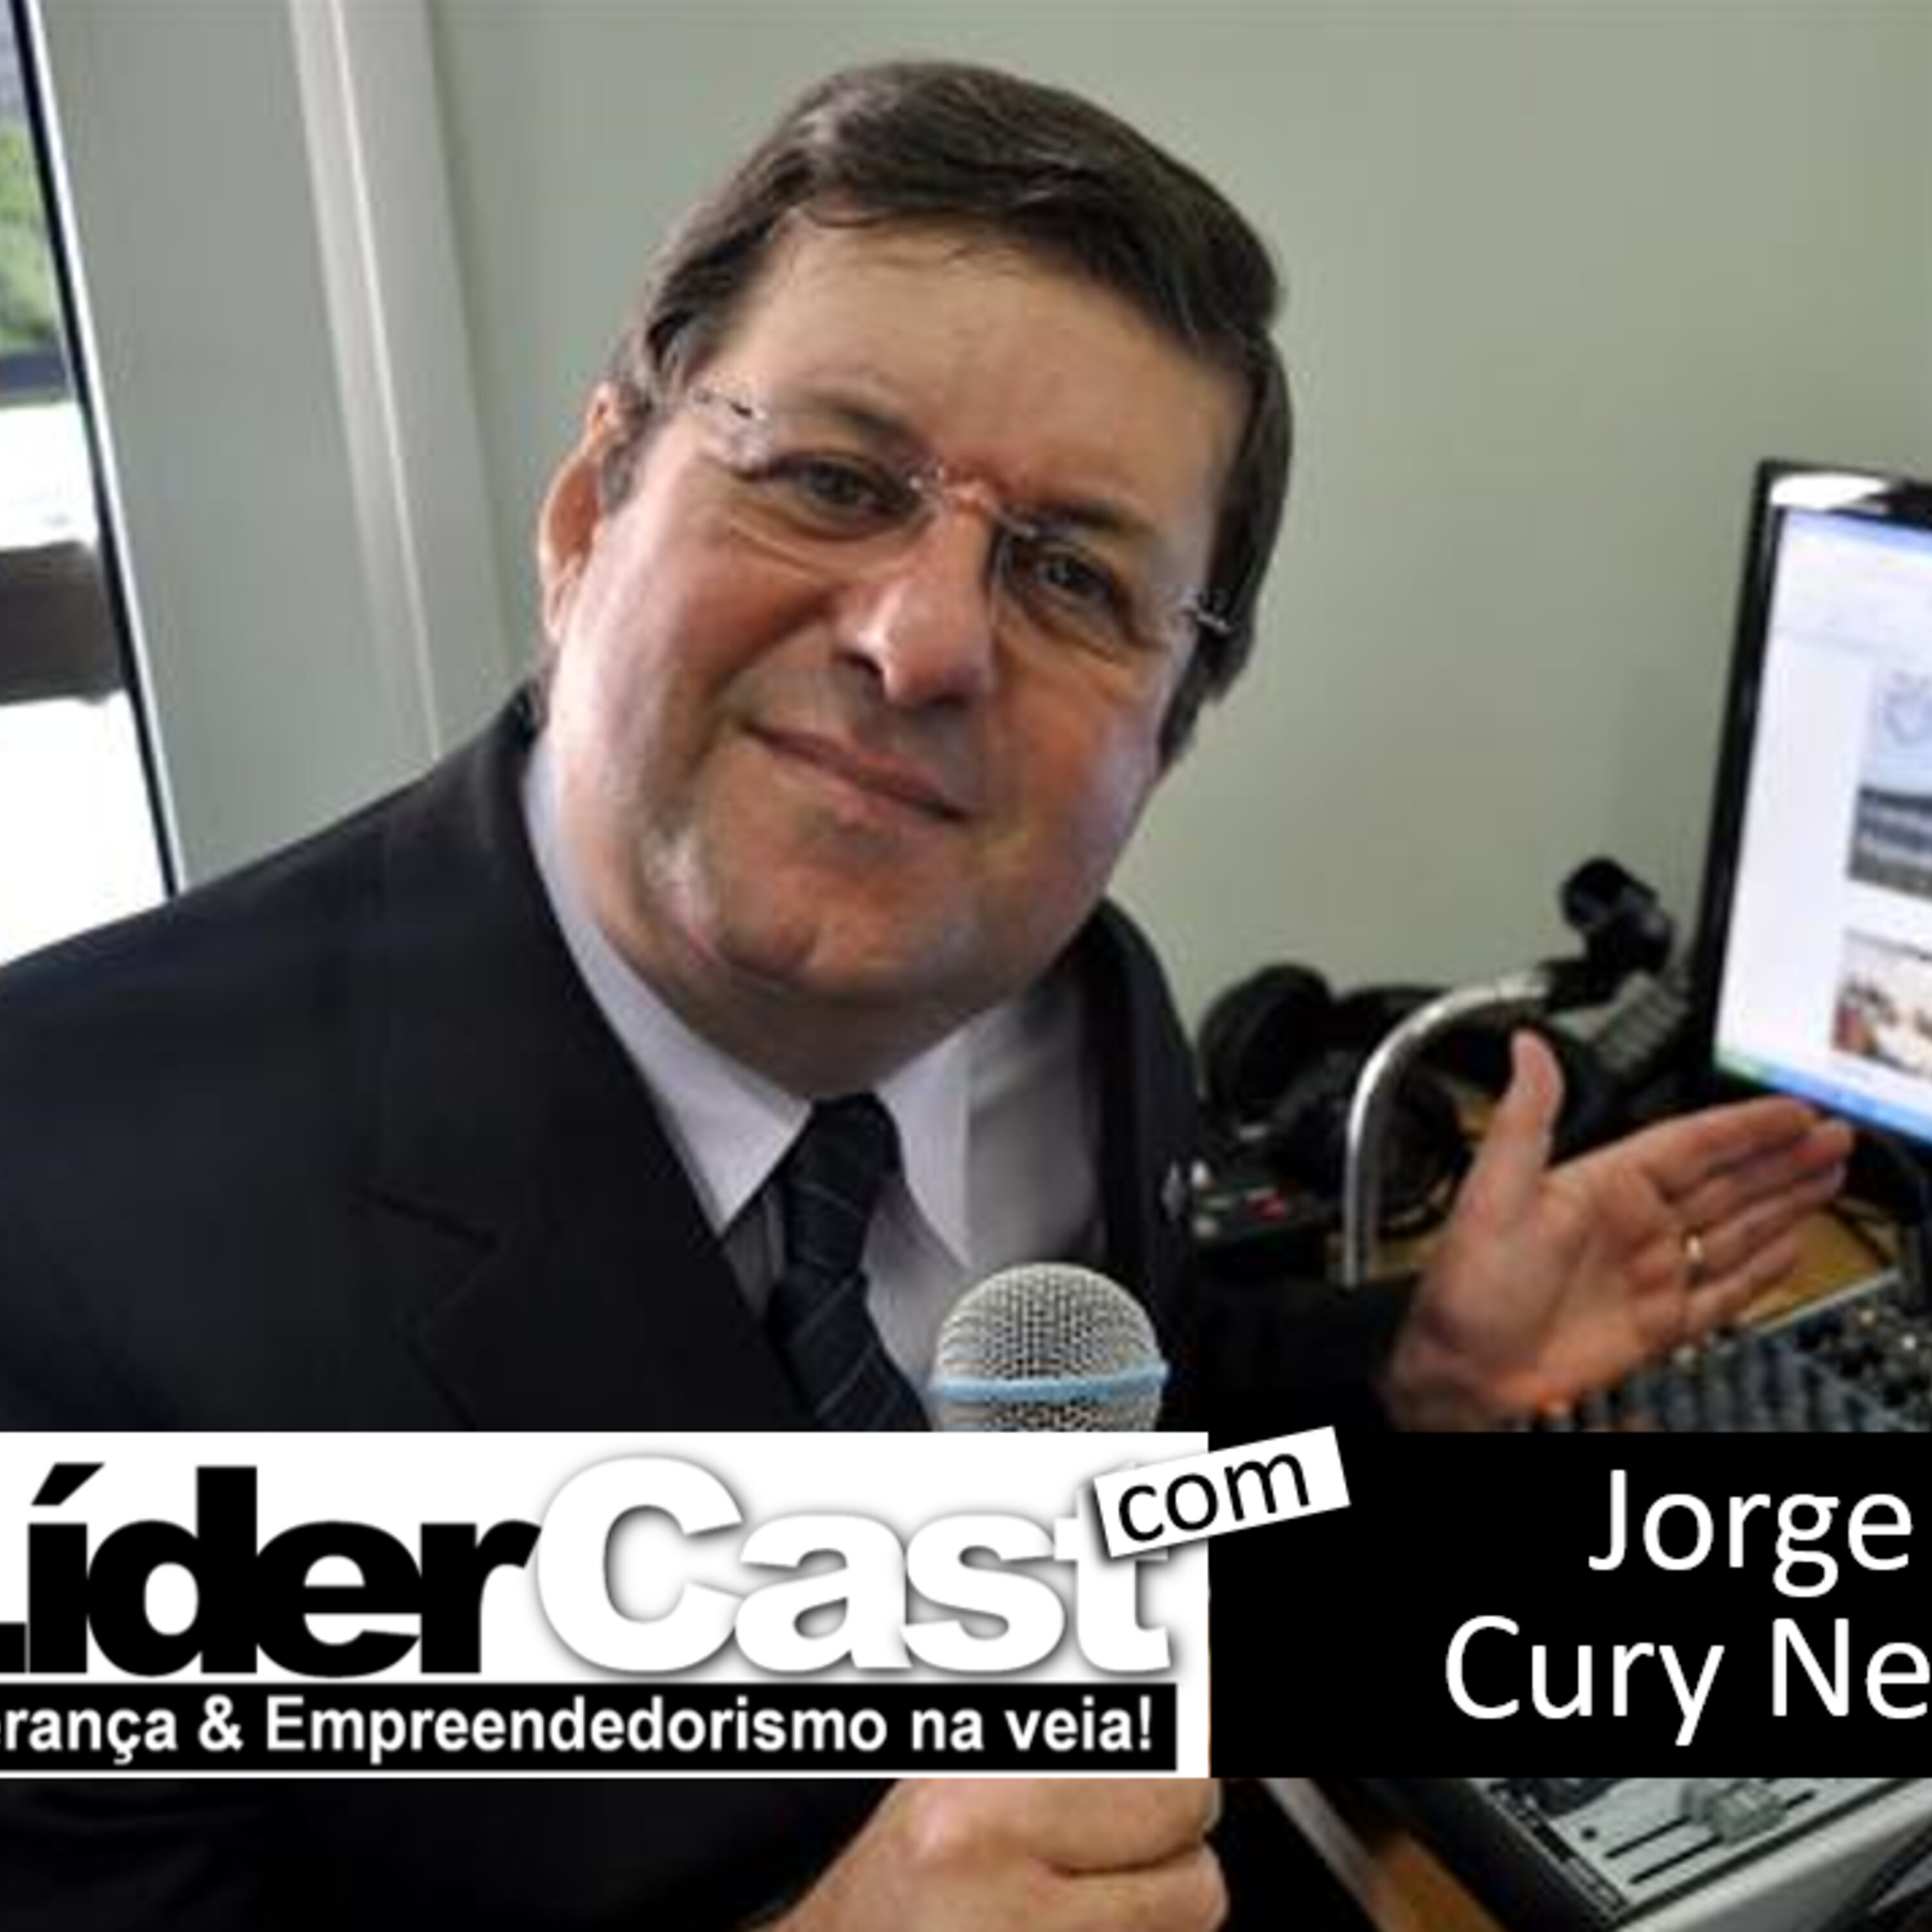 LíderCast 186 – Jorge Cury Neto